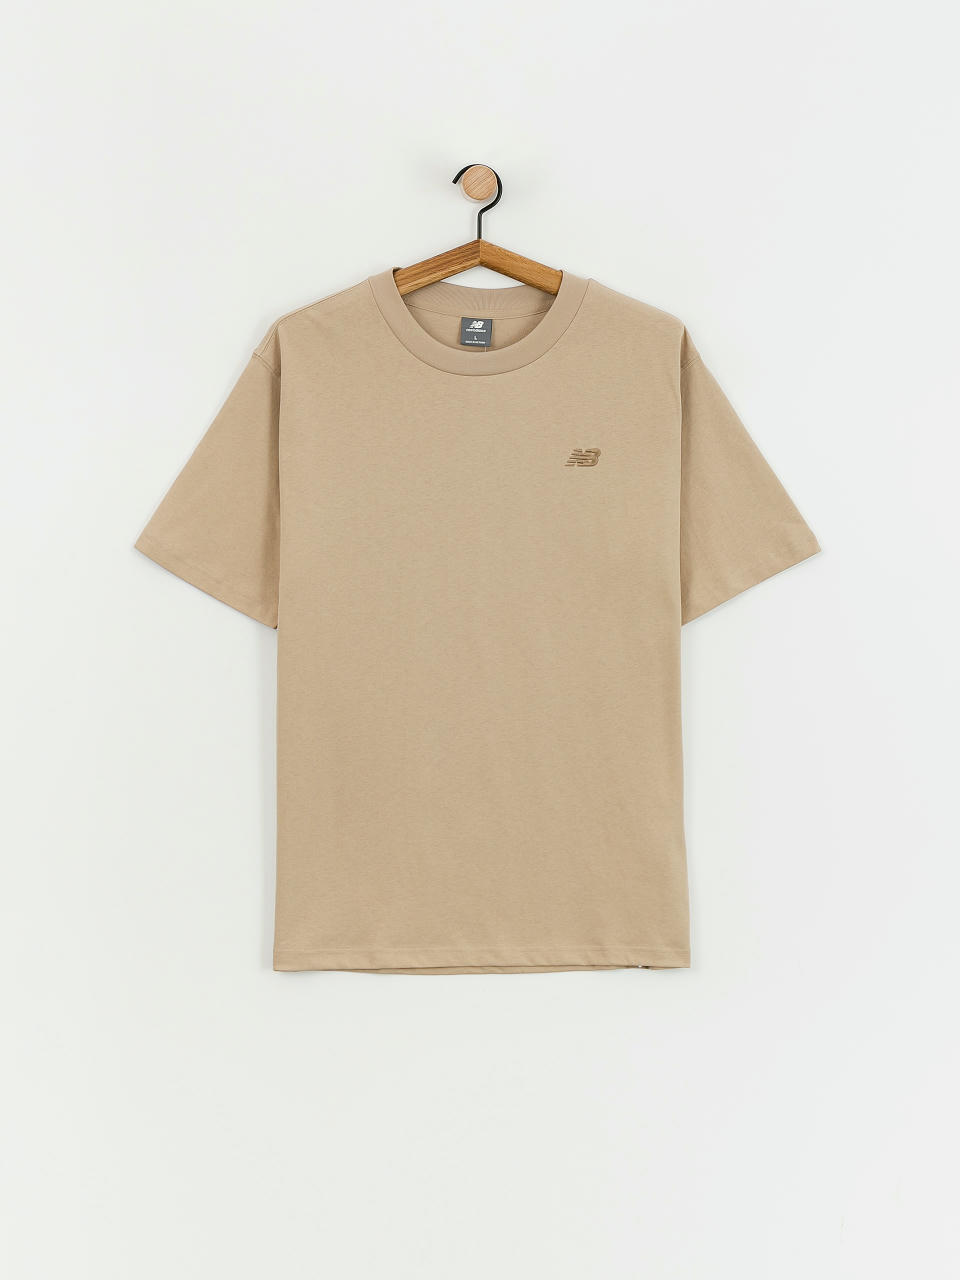 New Balance Atheltics Cotton T-Shirt (stonewar)